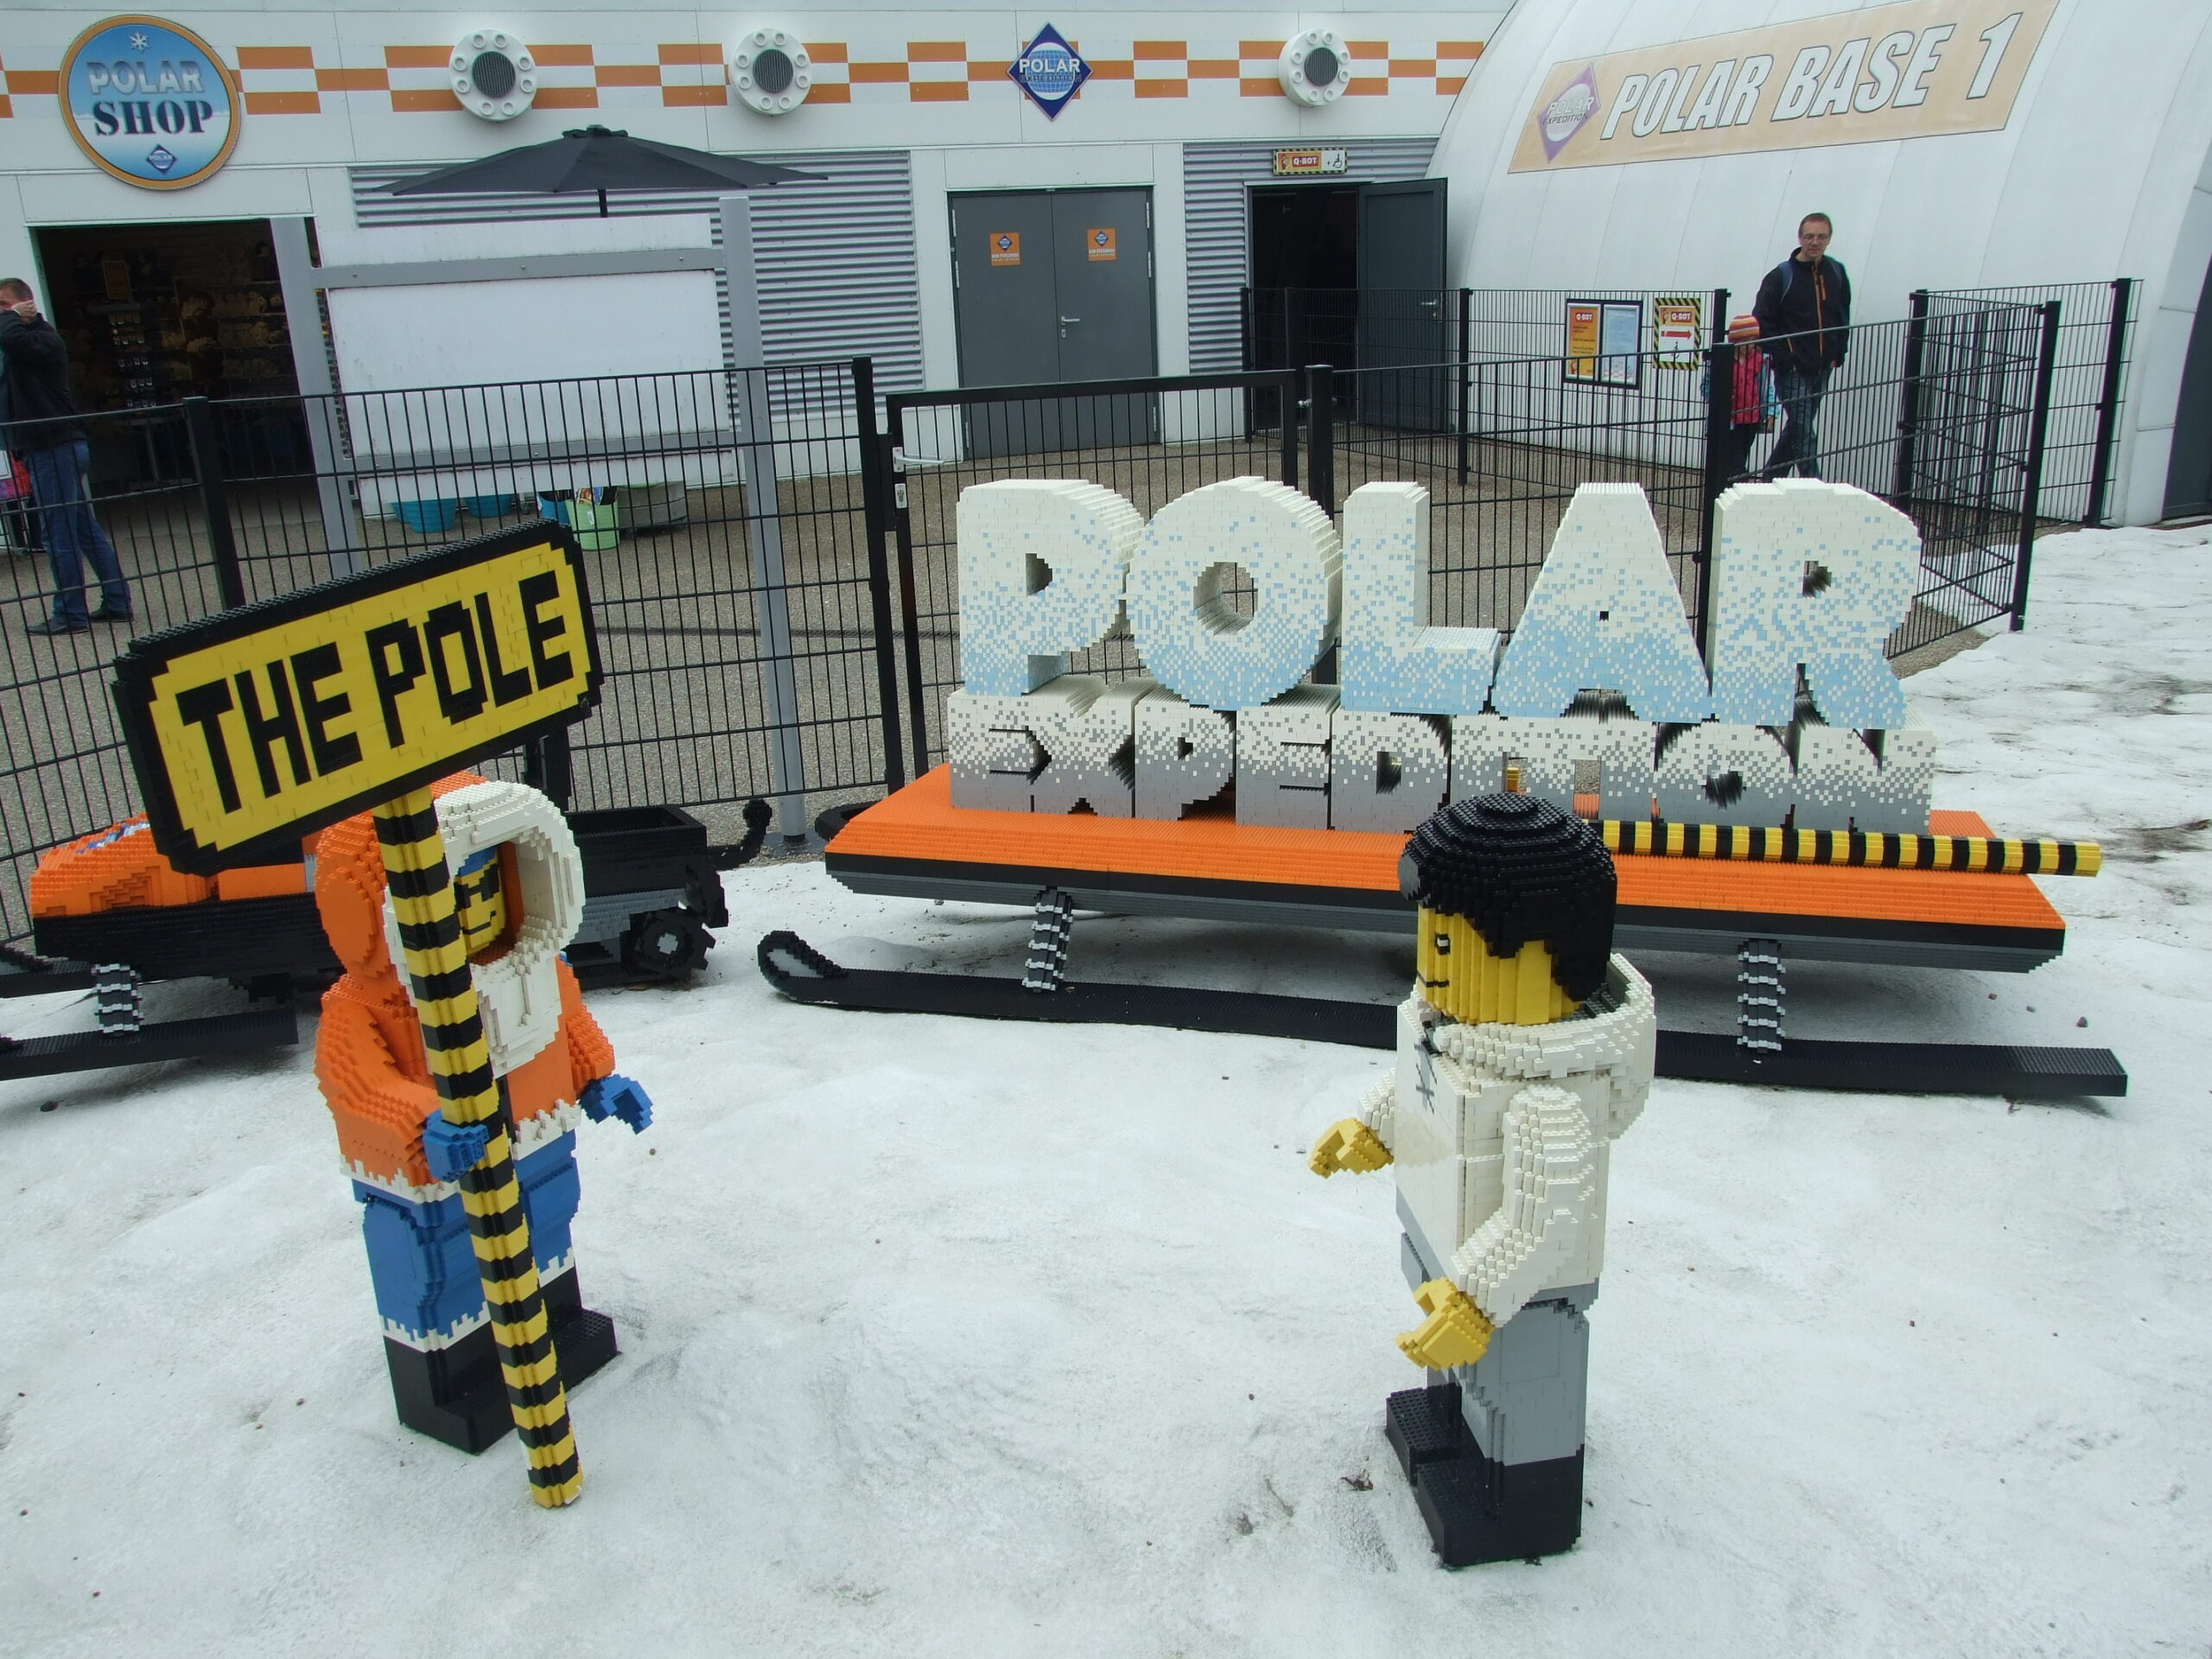 You are currently viewing Polar X-plorer (Legoland Billund)